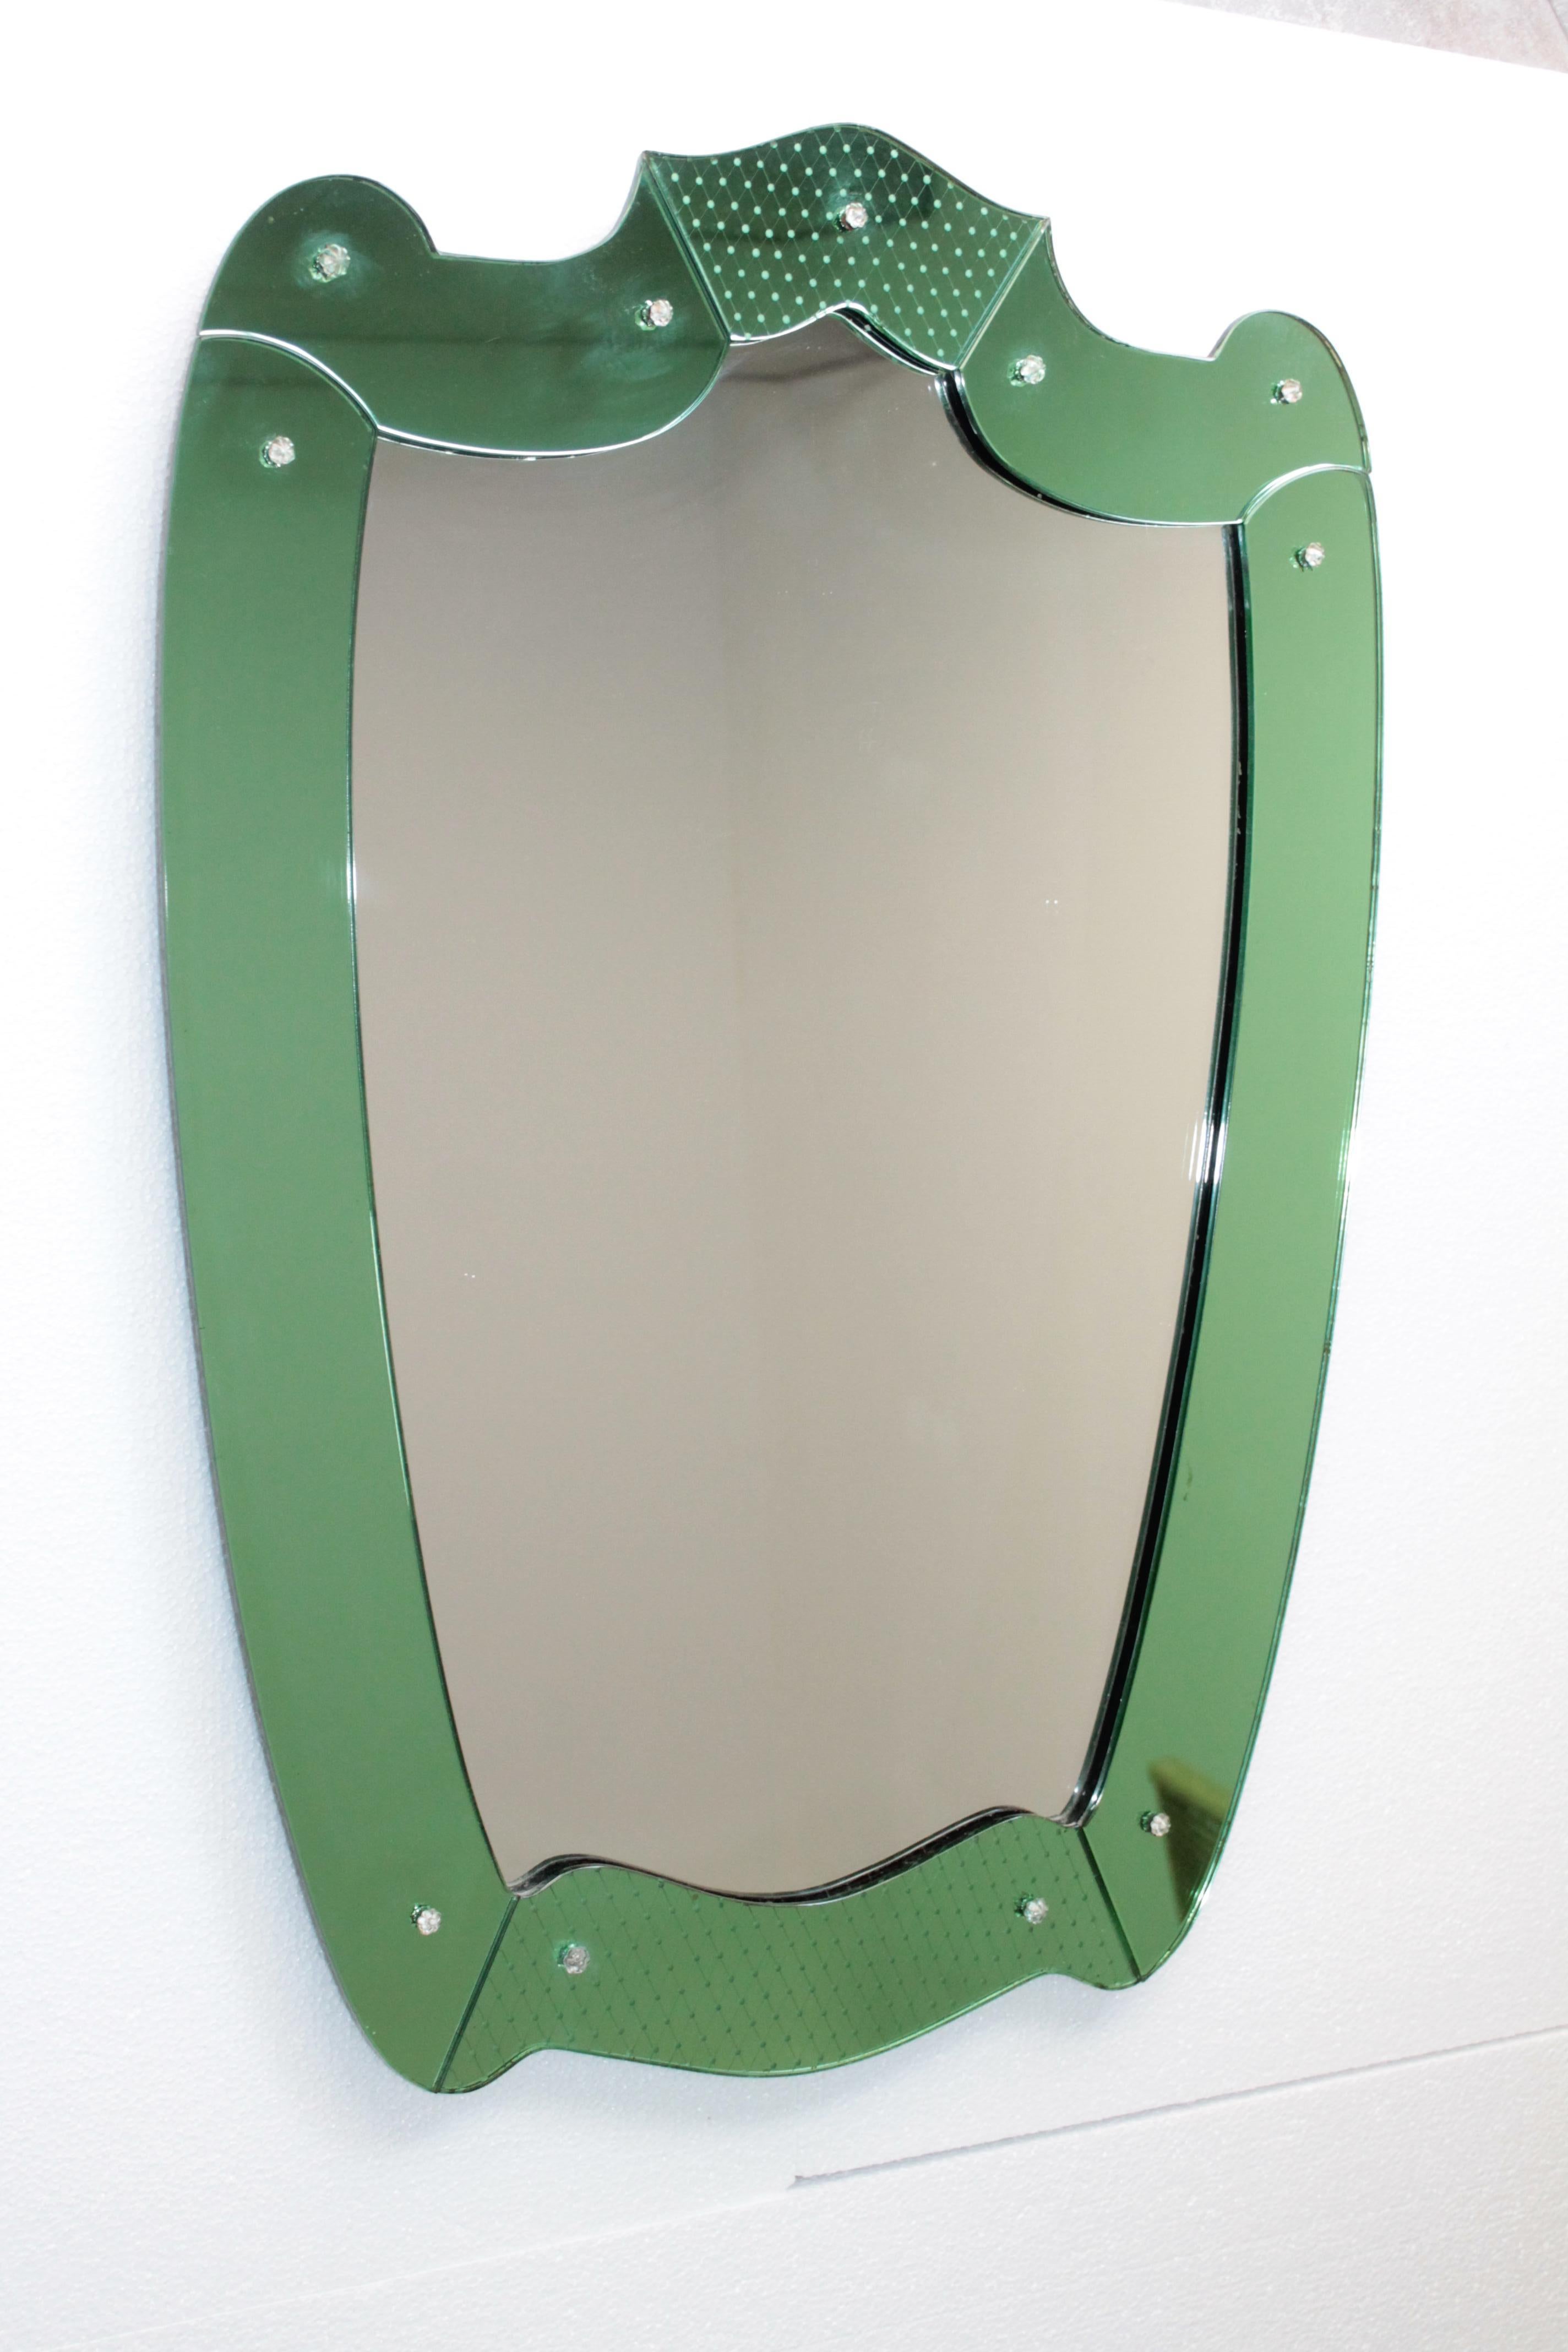 Wonderful mirror design Pietro Chiesa, Fontana Arte, 1940s.
Good condition.
Dimensions: 85 x 60cm.